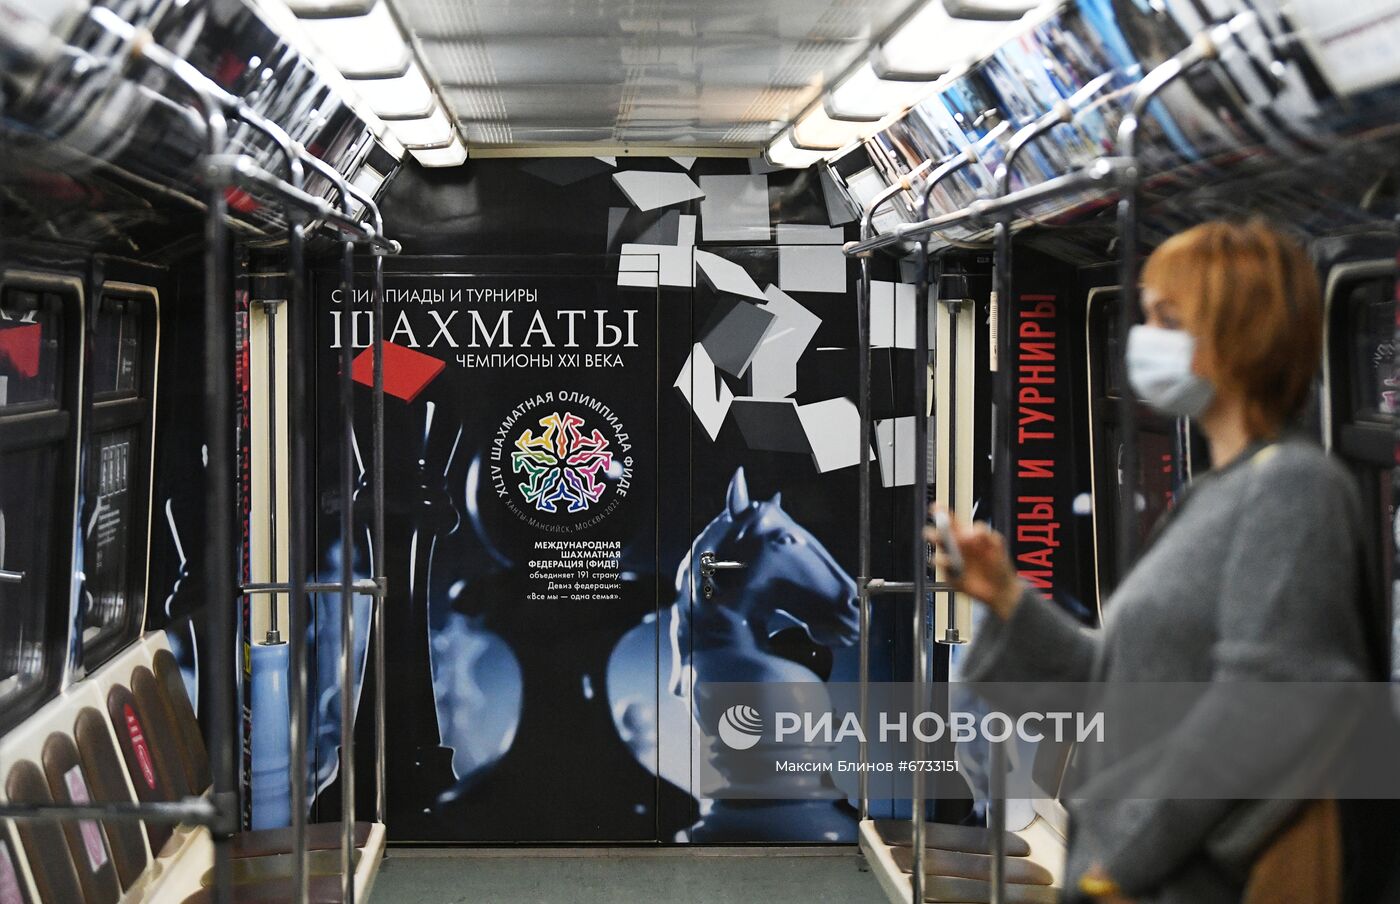 Запуск тематического поезда метро "Шахматы"